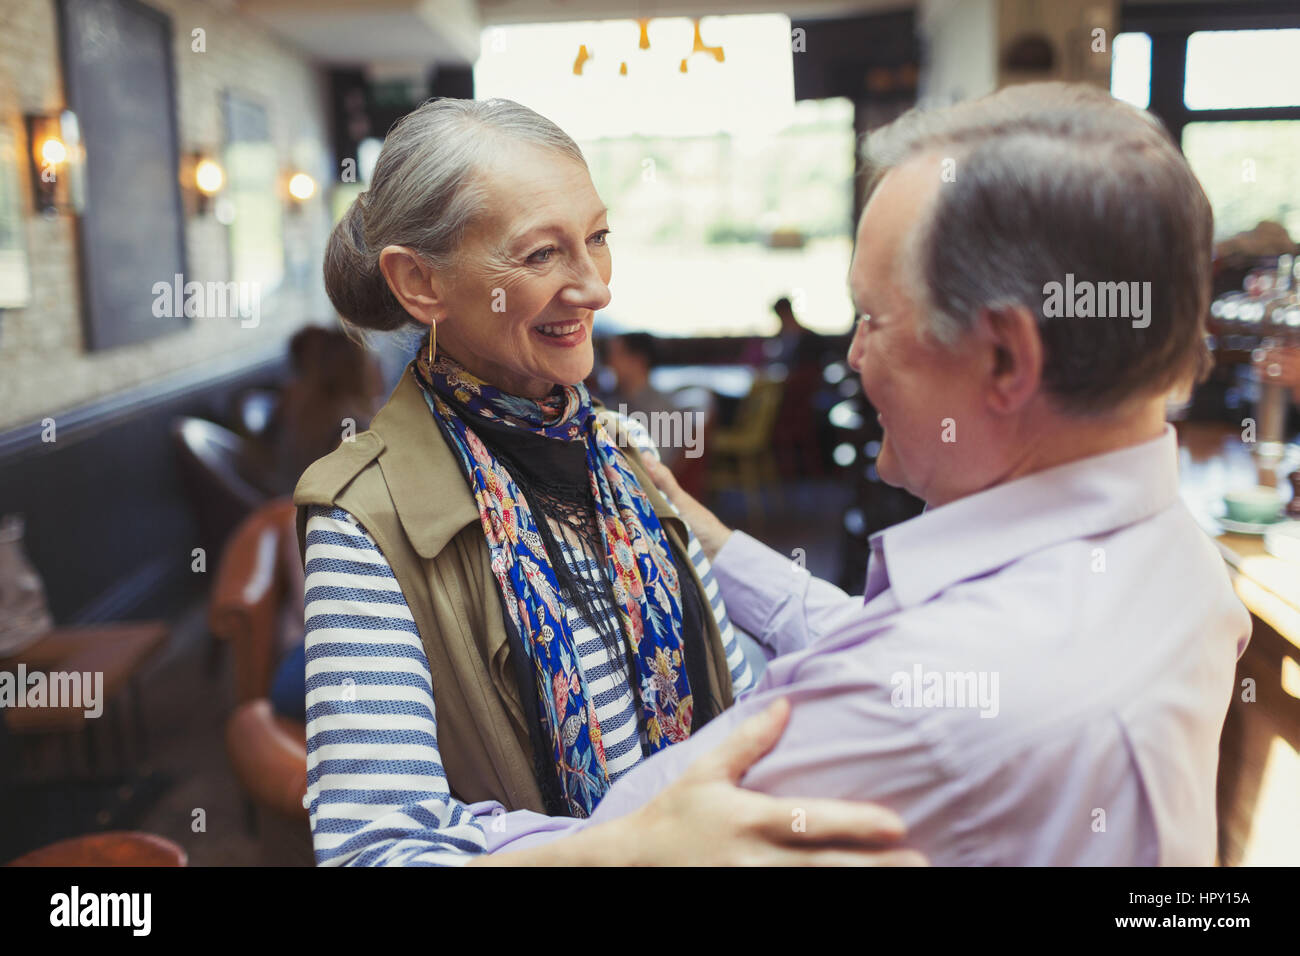 Affectionate senior couple hugging in bar Stock Photo